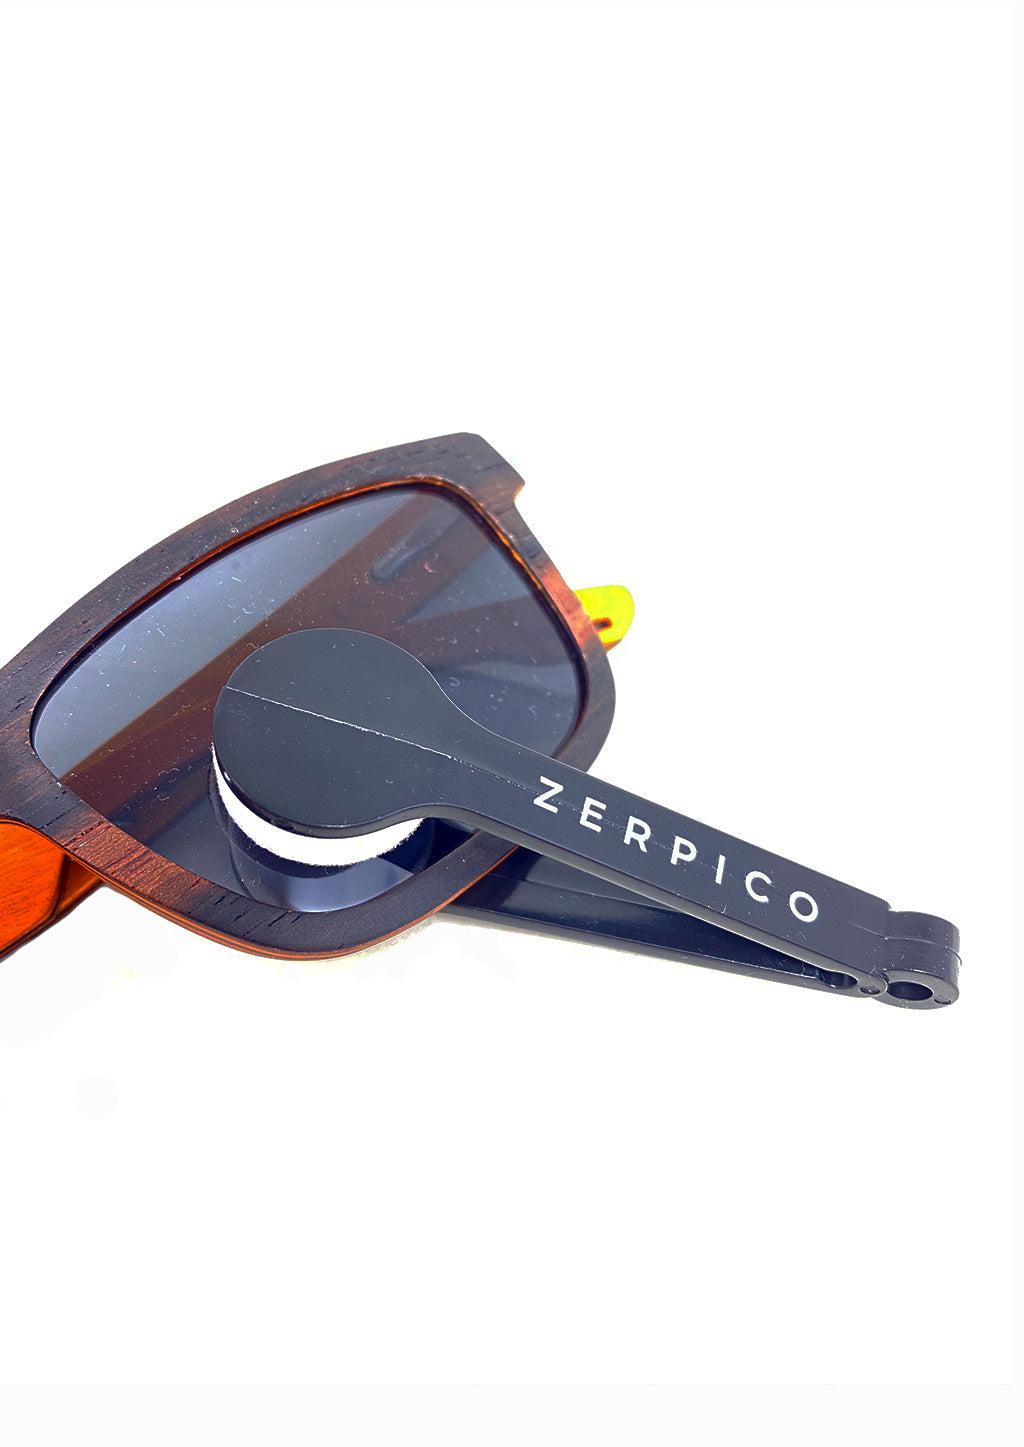 Rare Zerpico Bundle - 4 Pair of very rare sunglasses